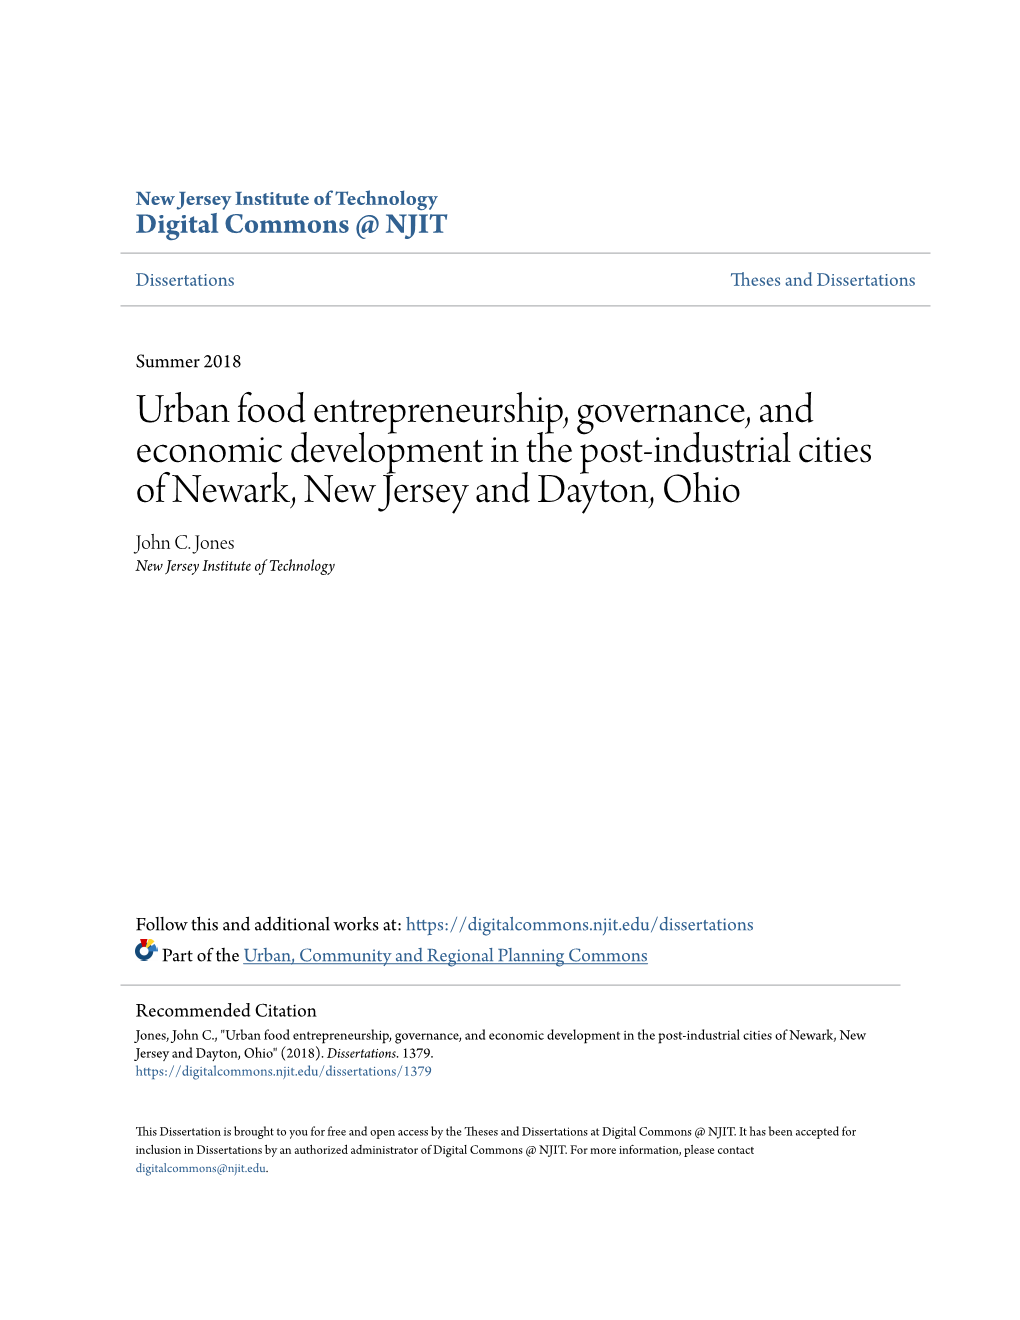 Urban Food Entrepreneurship, Governance, and Economic Development in the Post-Industrial Cities of Newark, New Jersey and Dayton, Ohio John C